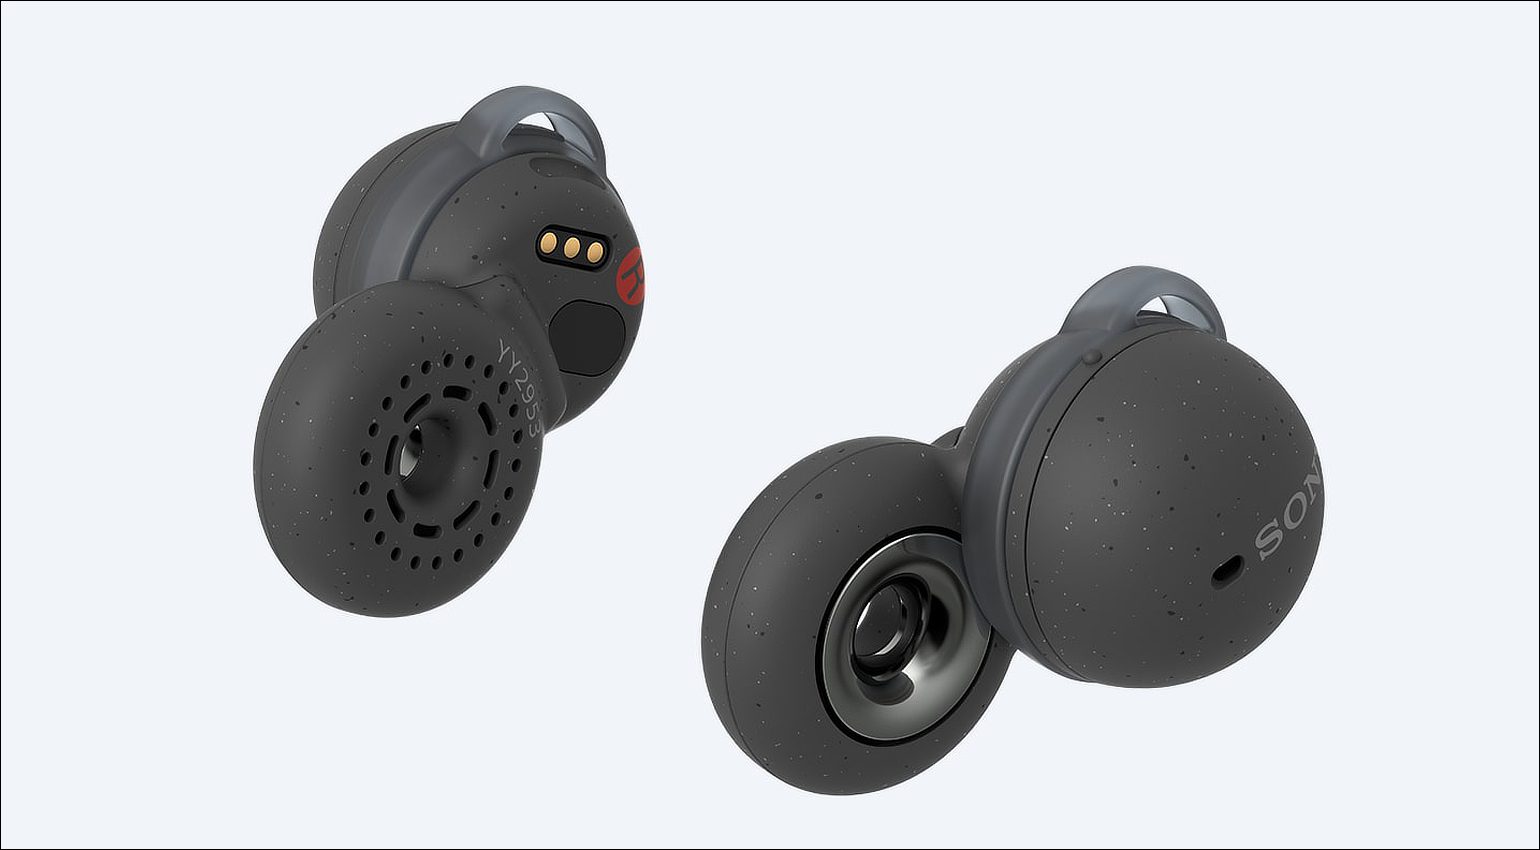 Earbuds galore: Sony LinkBuds und Audio-Technica ATH-CKS50TW